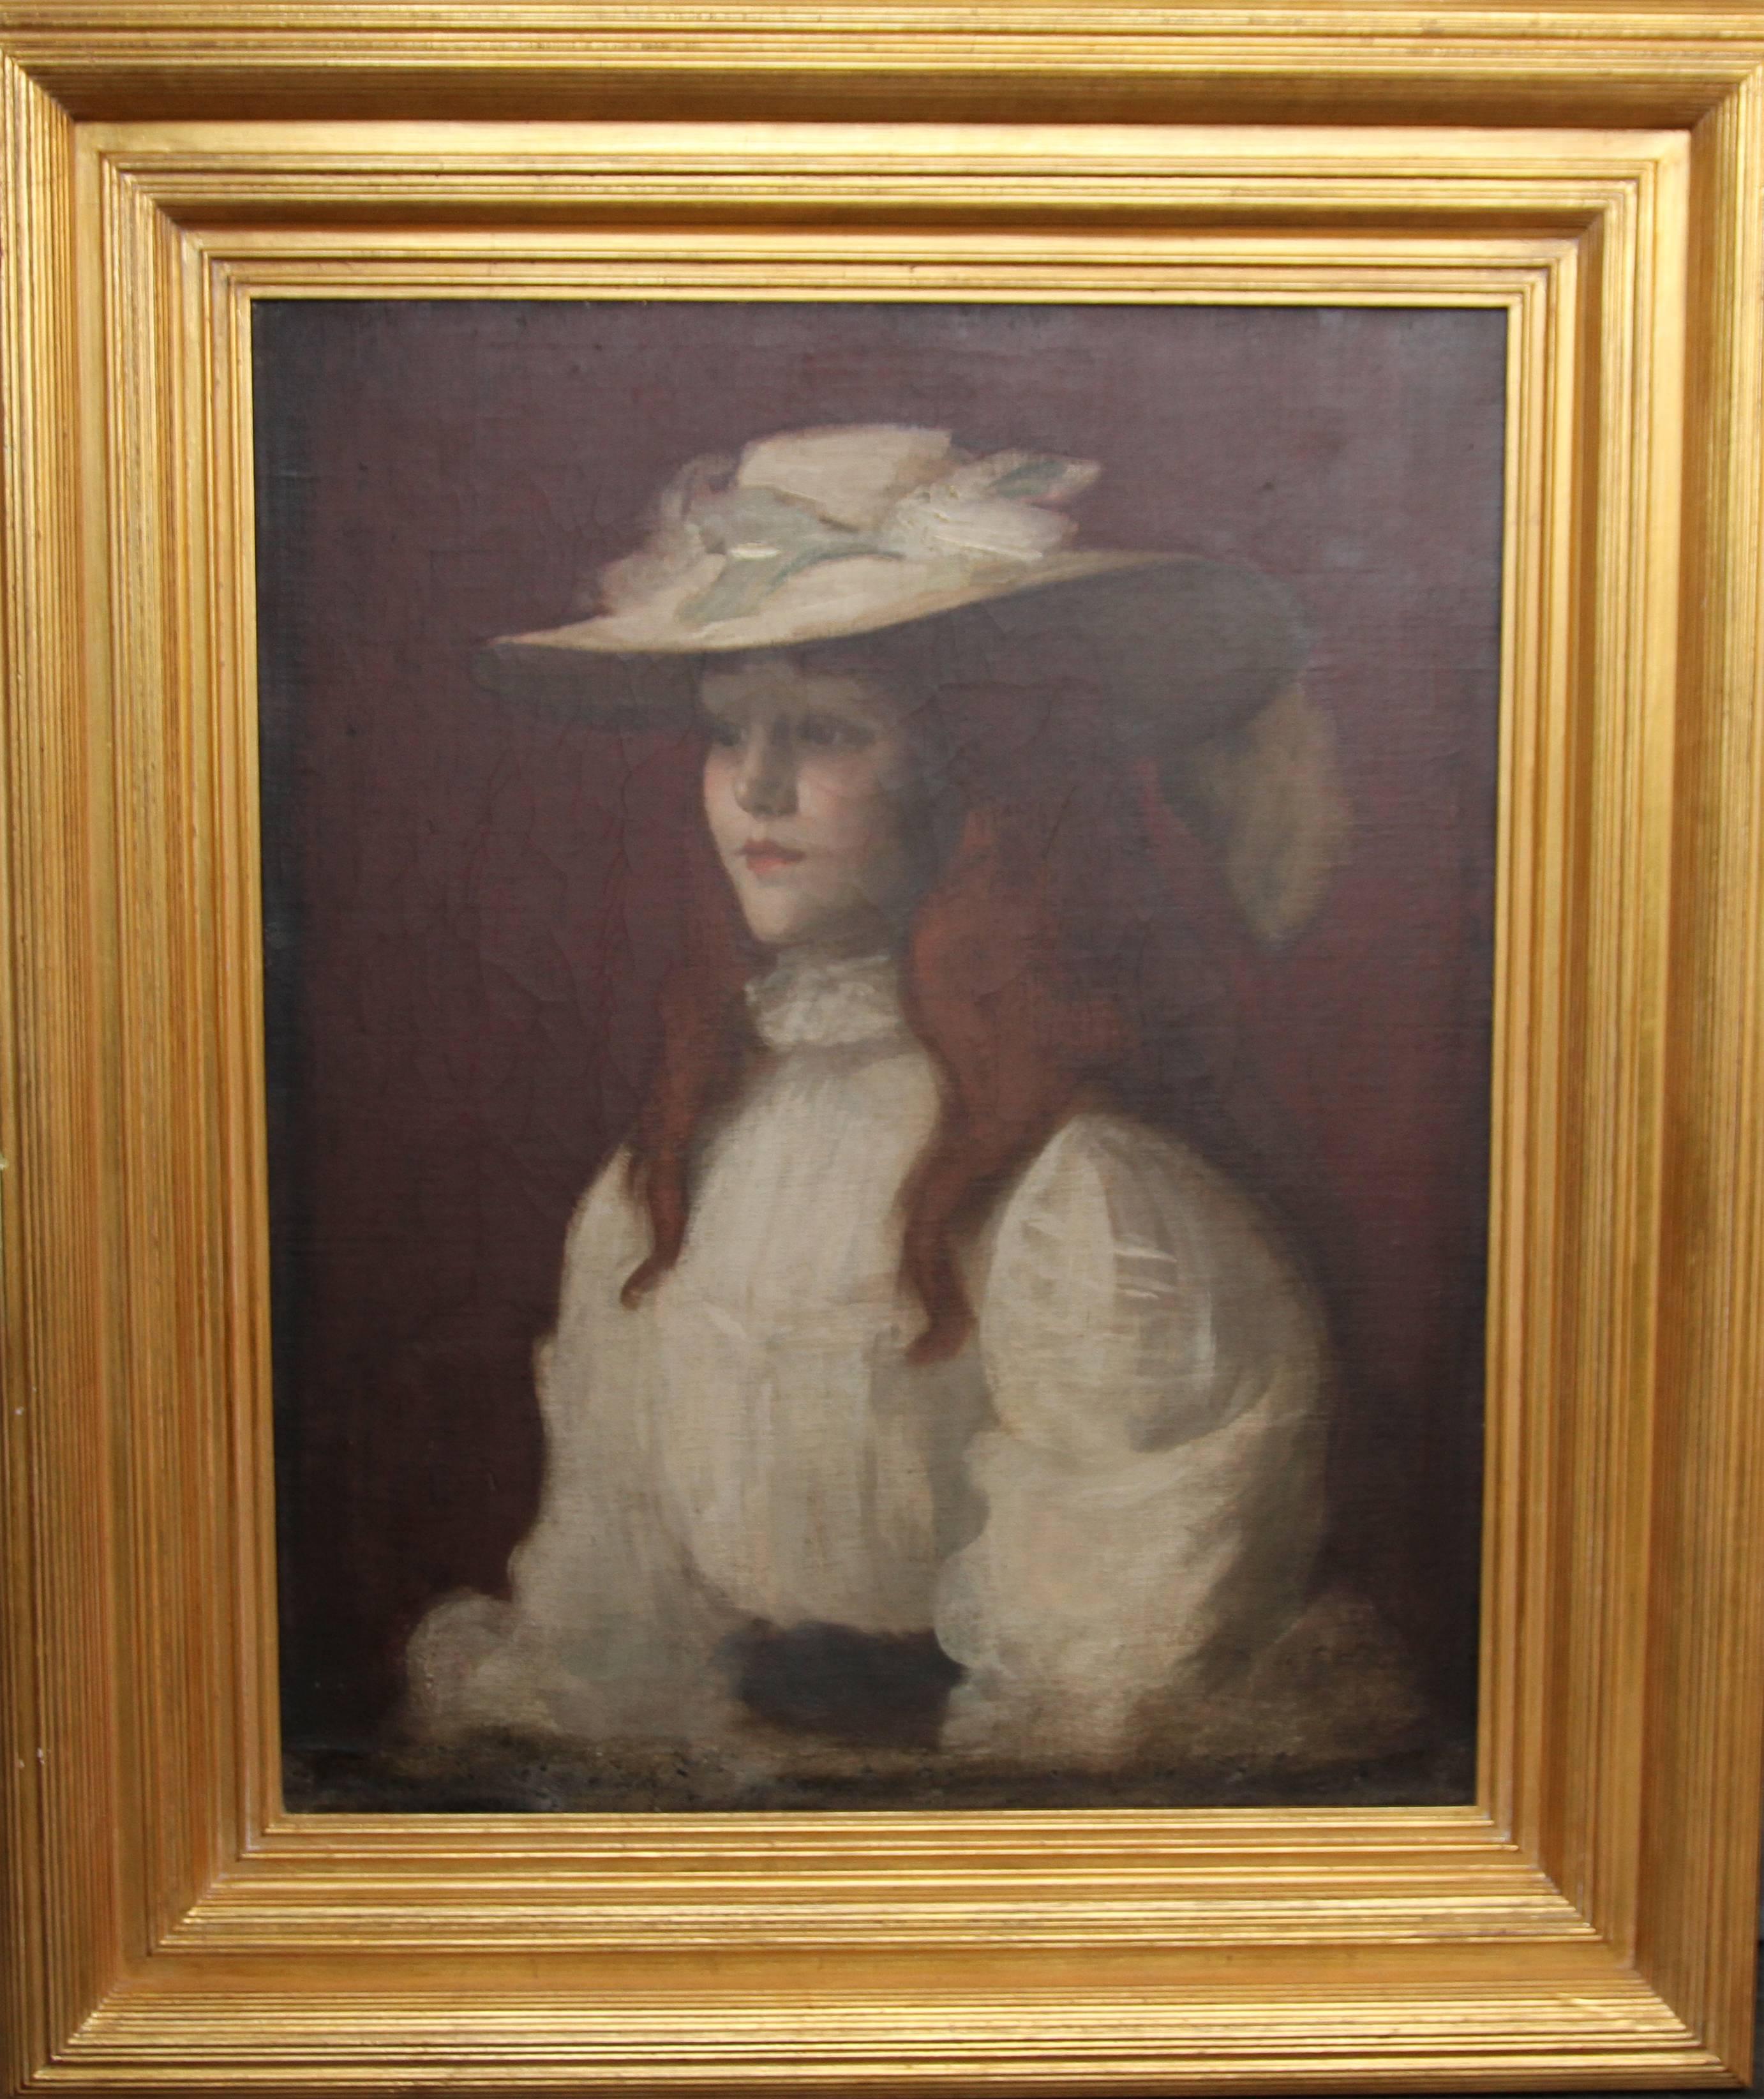 Stansmore Richmond Leslie Deans Portrait Painting - Girl in Straw Hat - Scottish Edwardian Glasgow Girl artist portrait oil painting